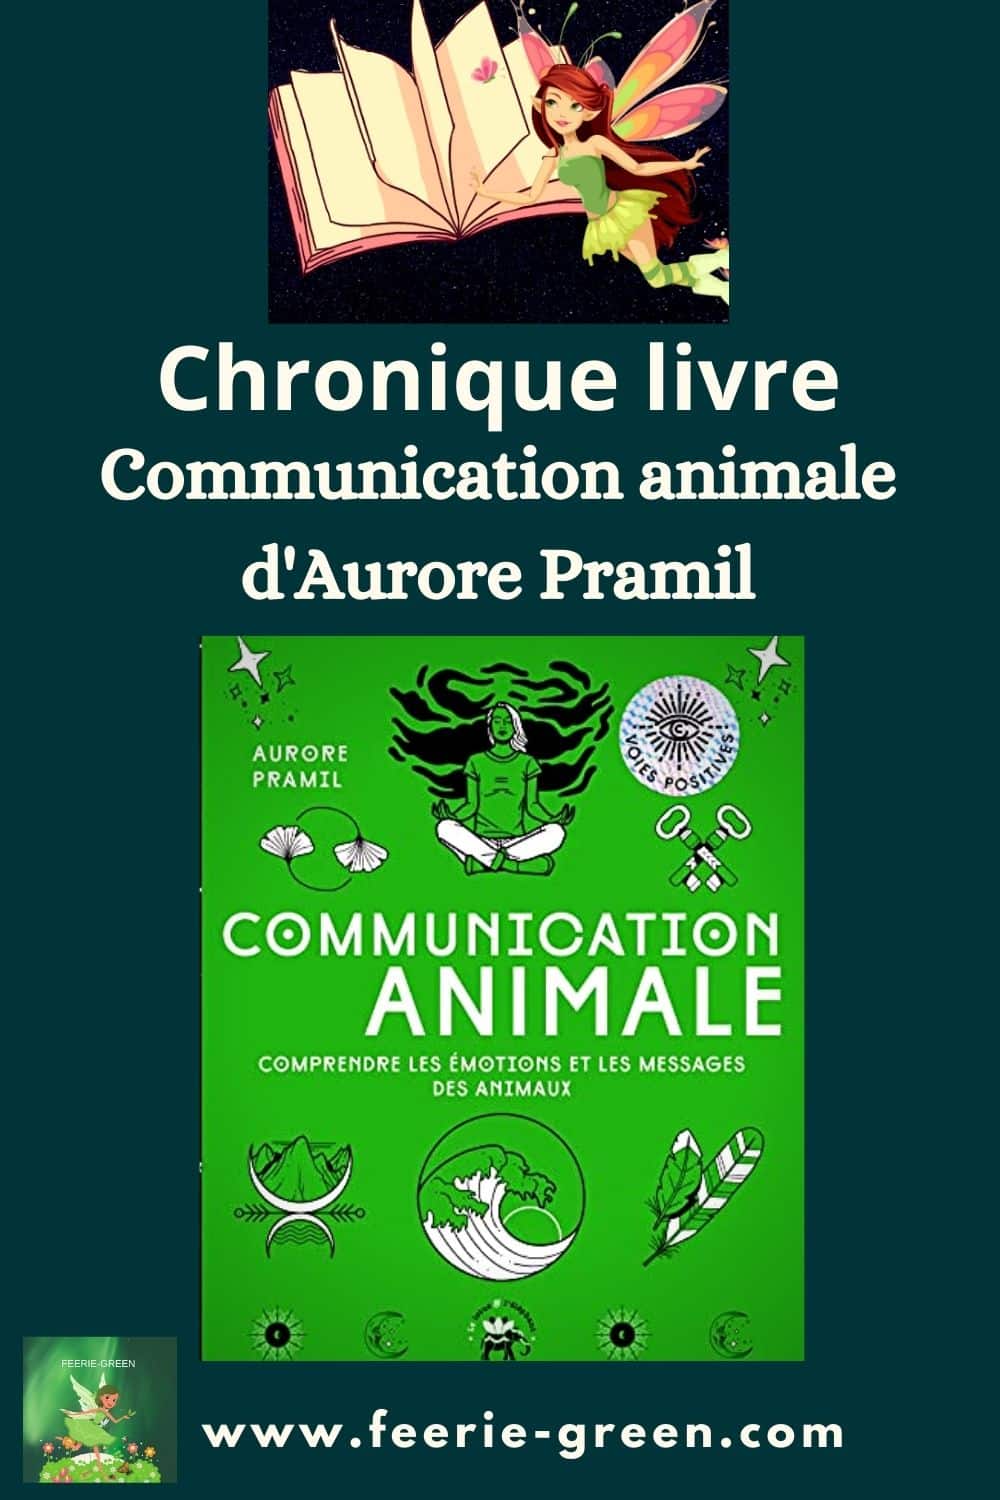 Communication animale d'Aurore Pramil - pinterest